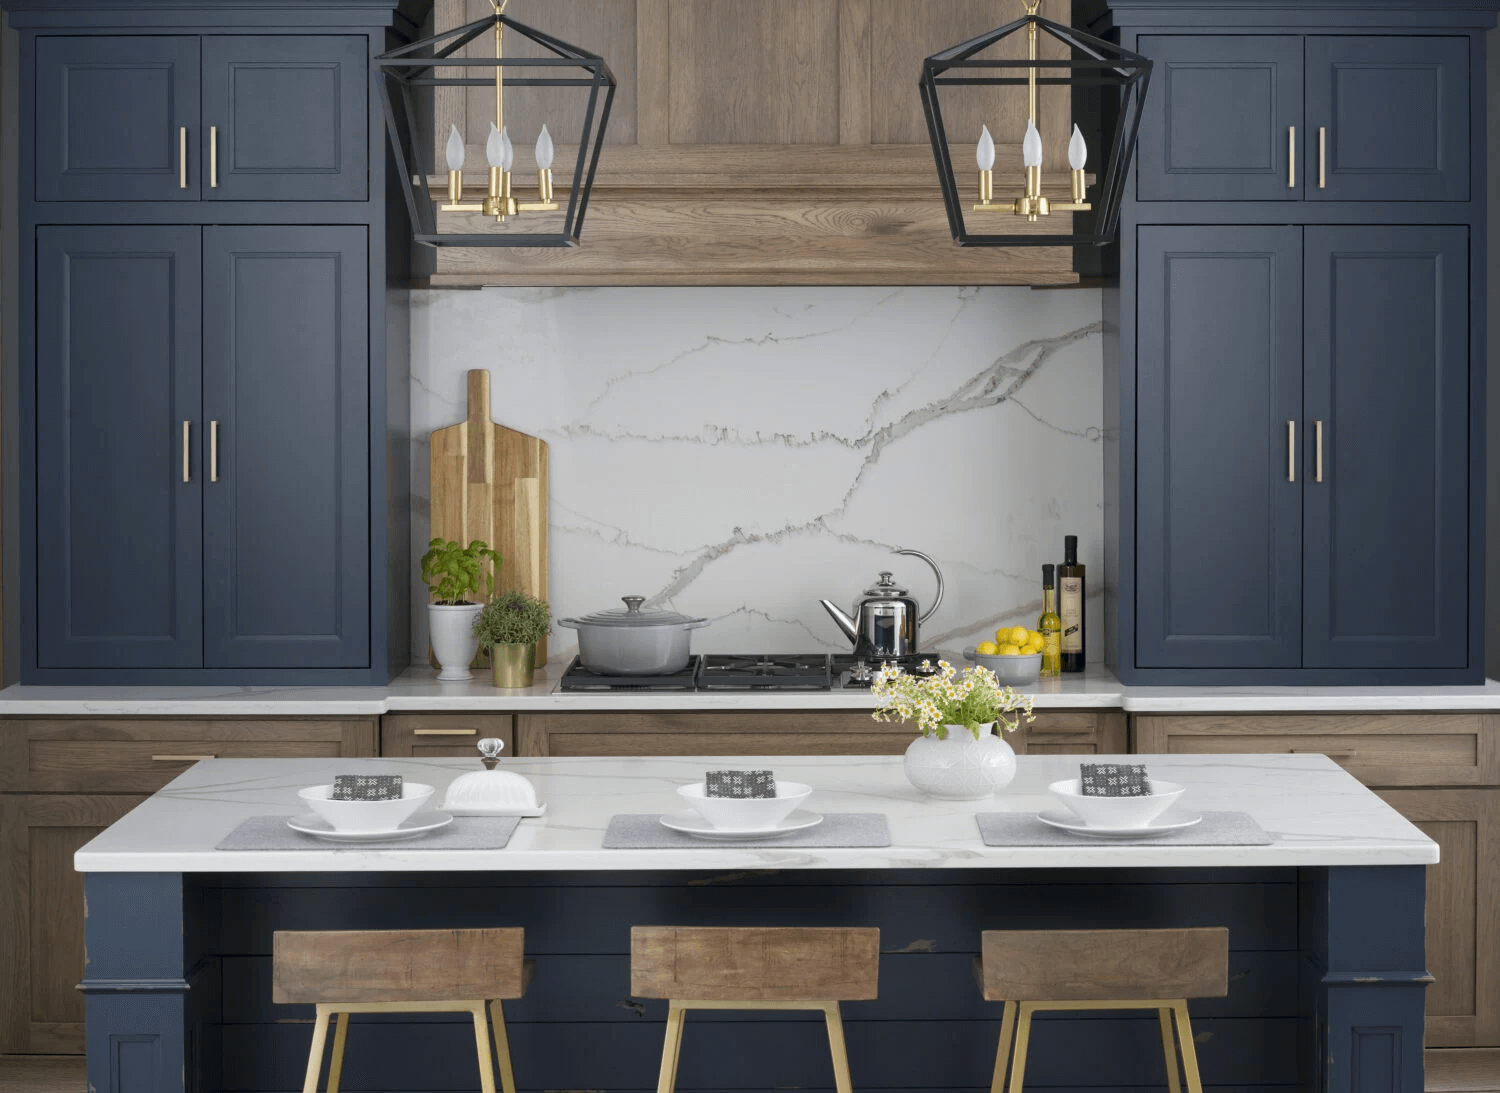 Dark blue kitchen cabinets and a natural stone slab backsplash